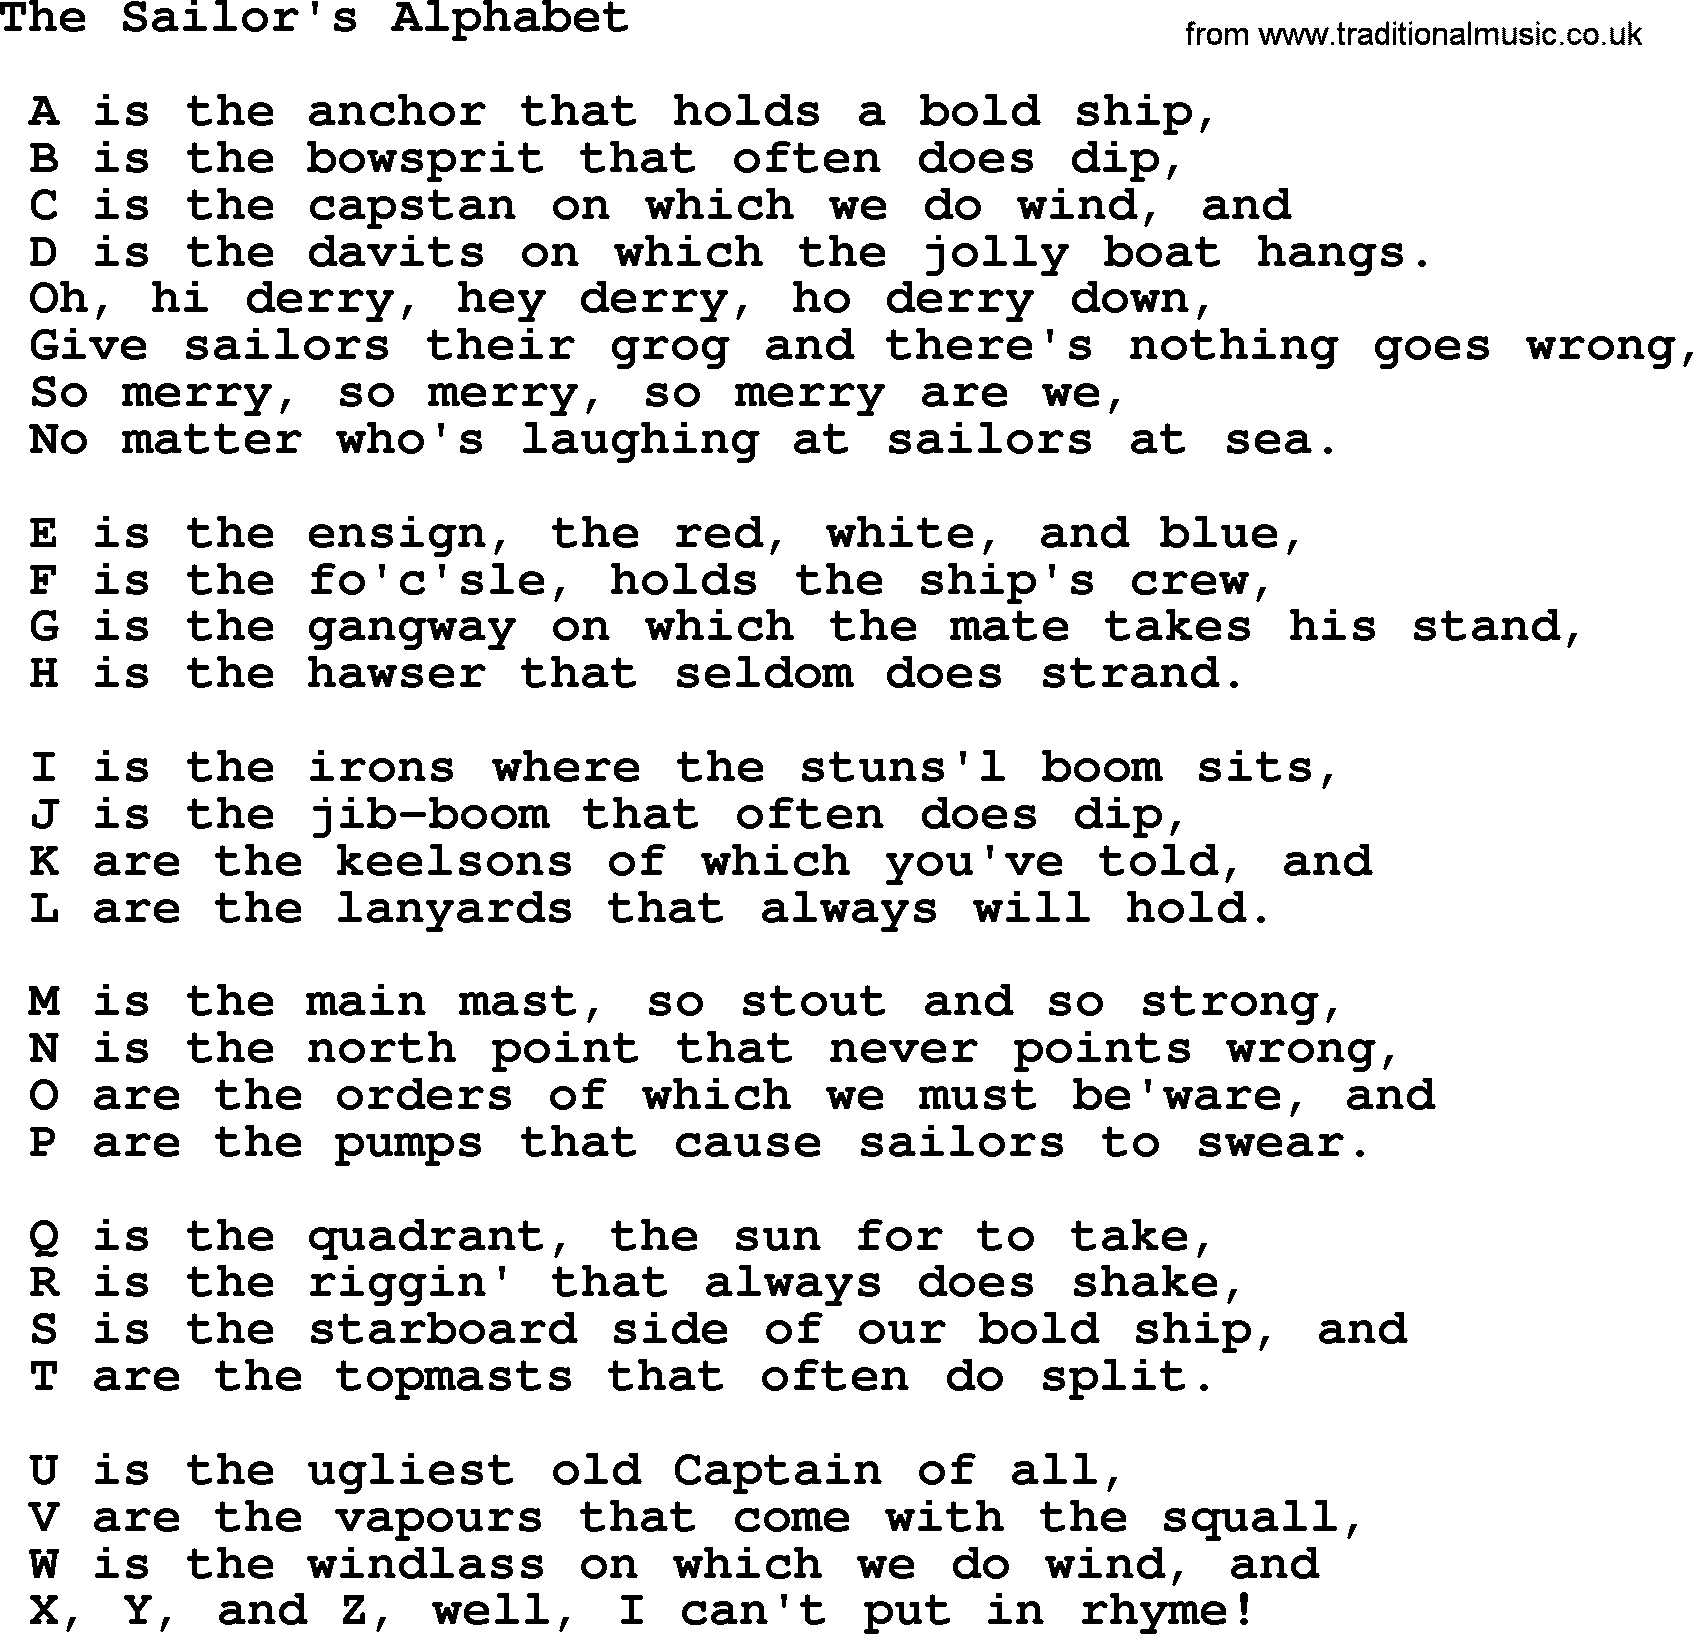 Sea Song or Shantie: The Sailors Alphabet, lyrics